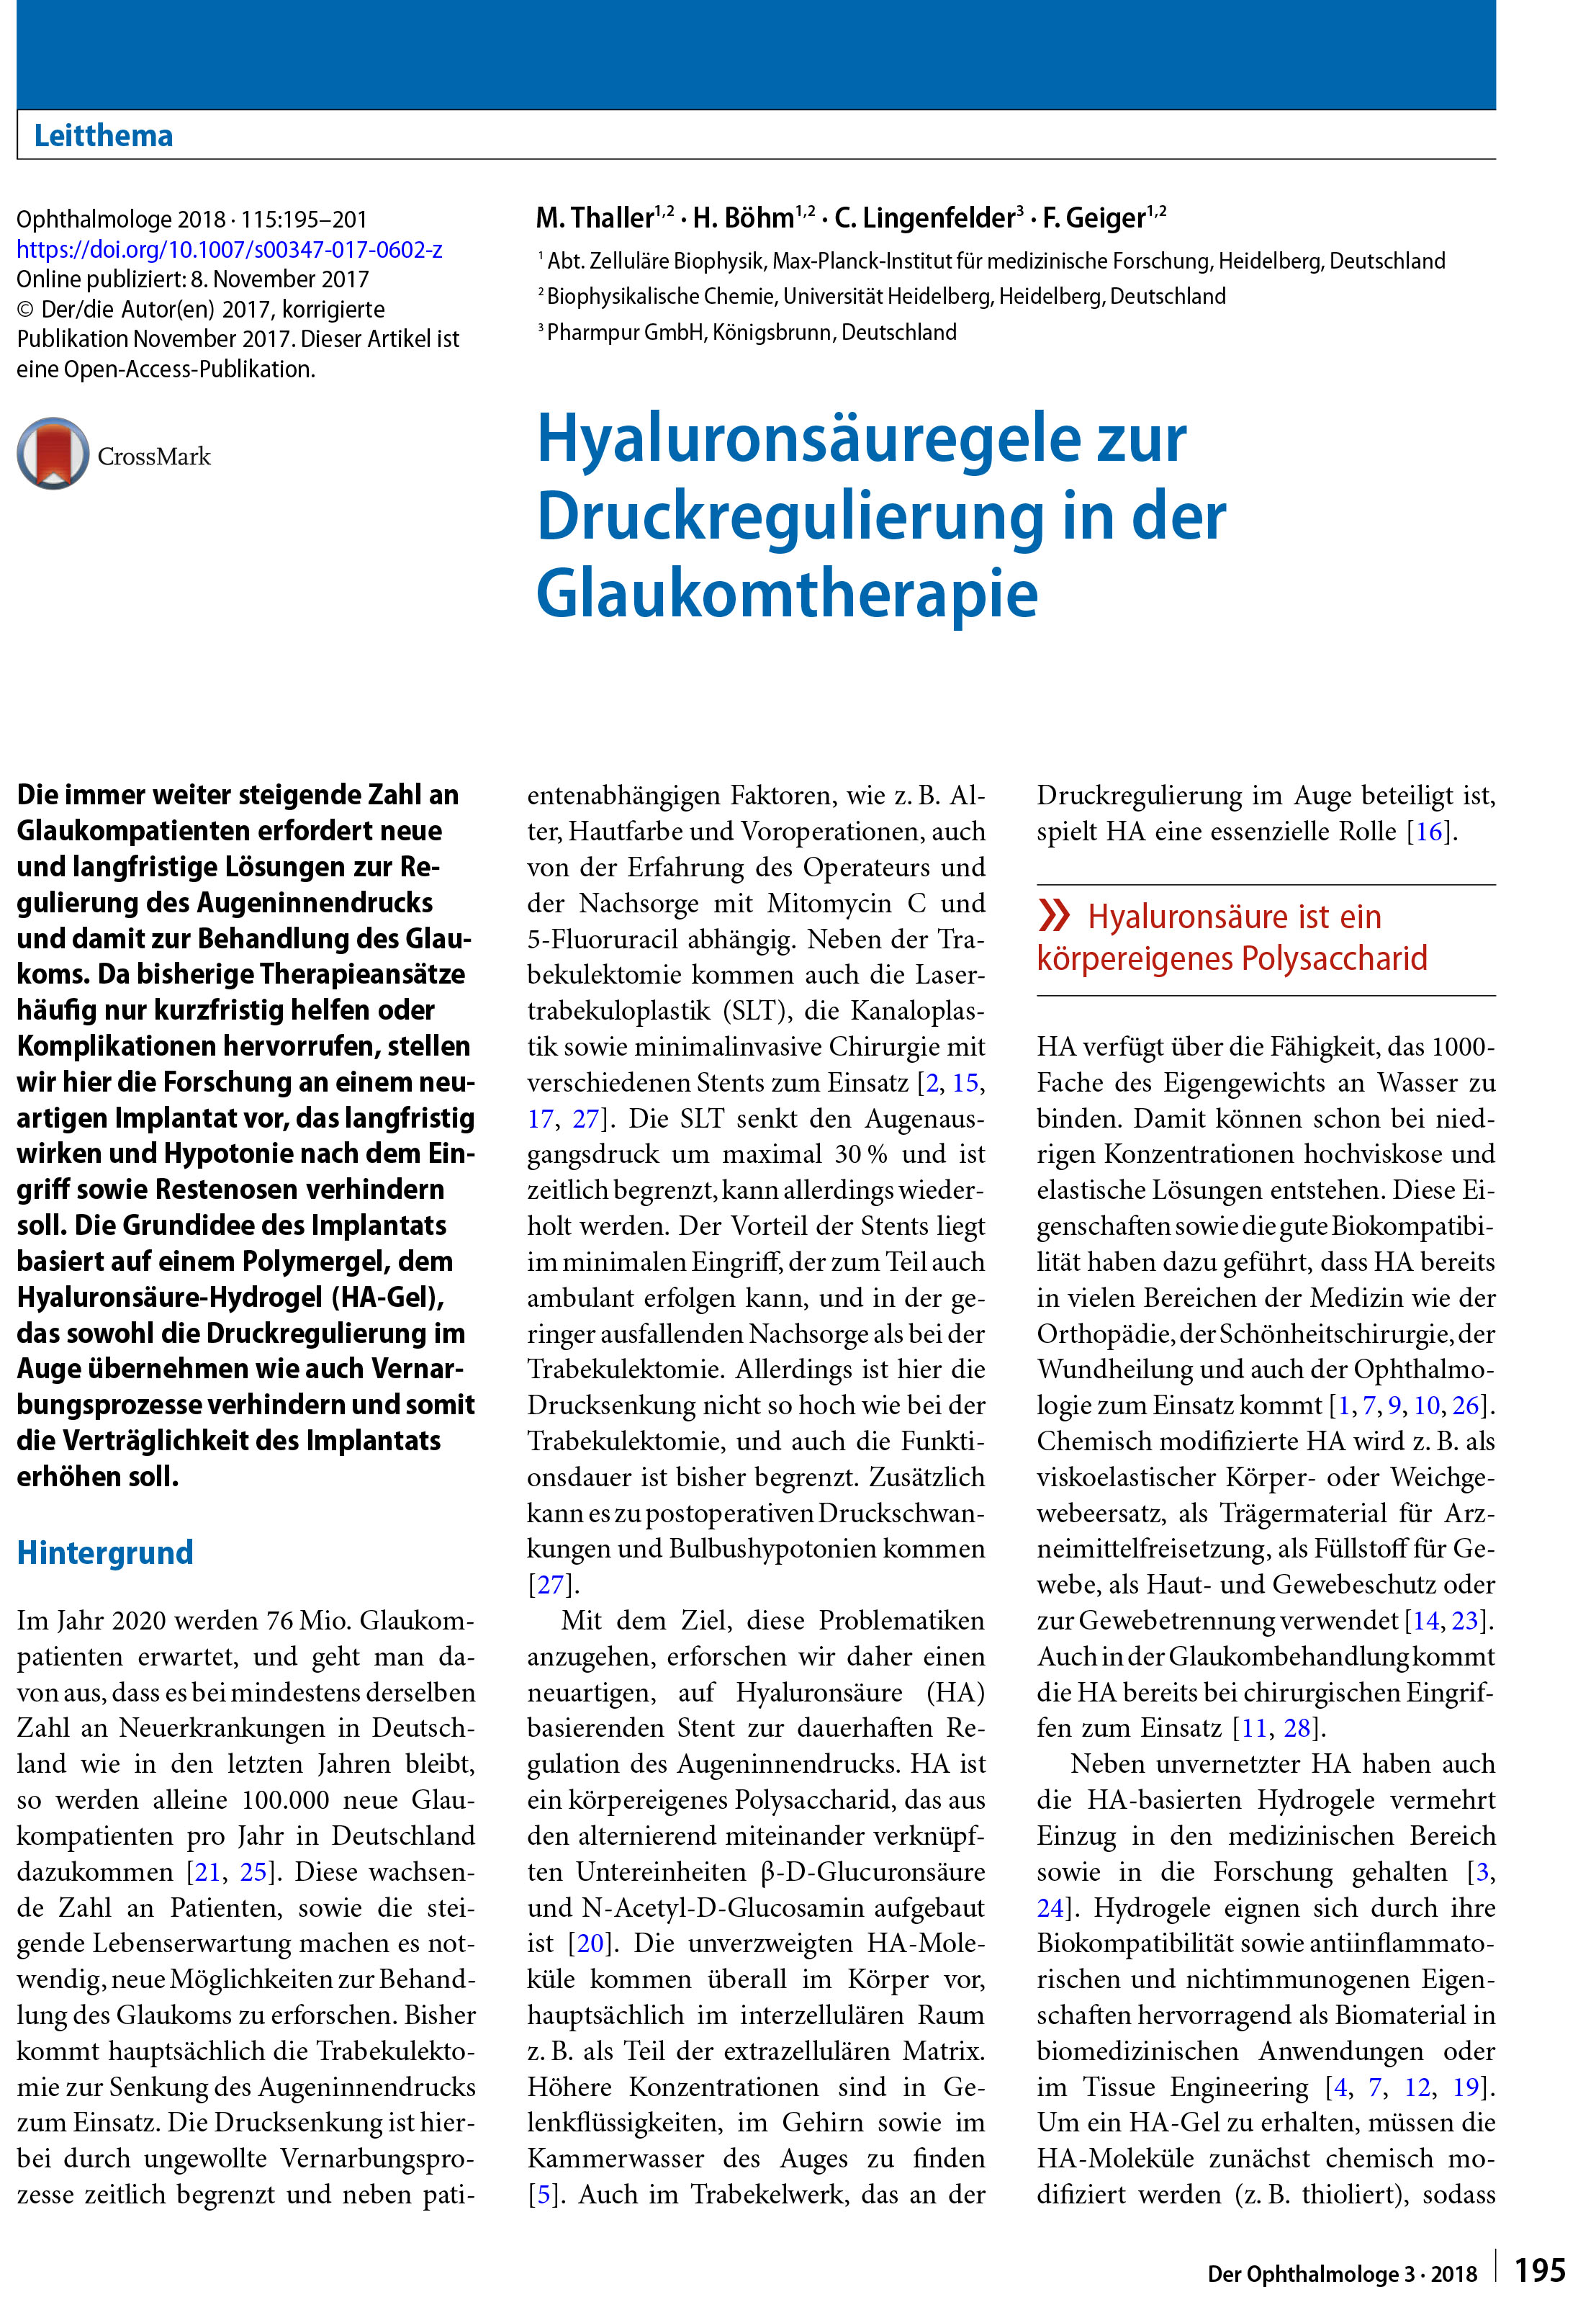 Hyaluronic-acid-gels-for-pressure-regulation-in-glaucoma-treatment-1.jpg